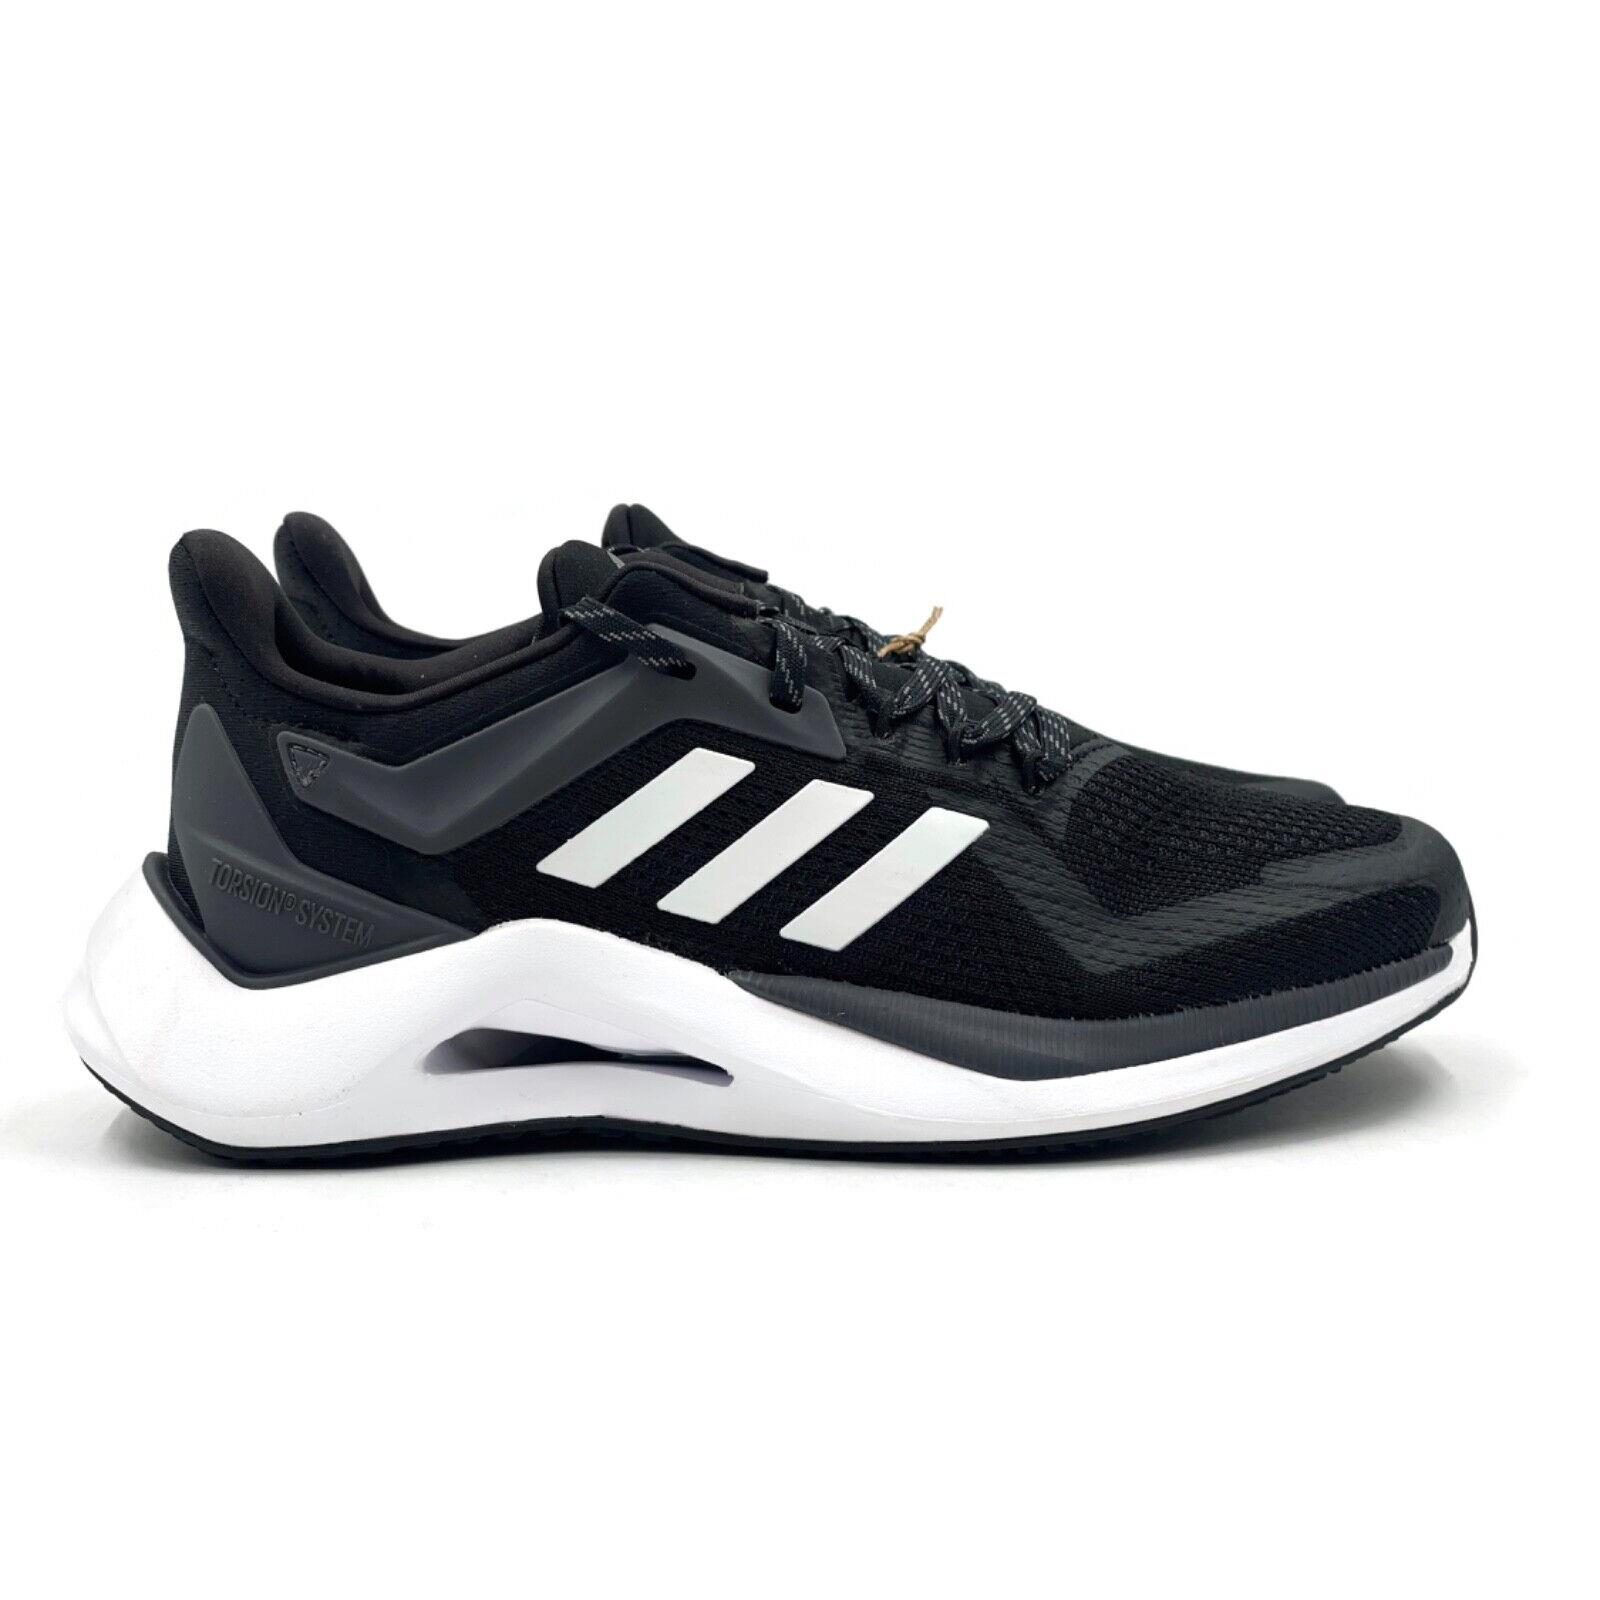 Adidas Alphatorsion 2.0 Women Casual Running Shoe Black White Trainer Sneaker